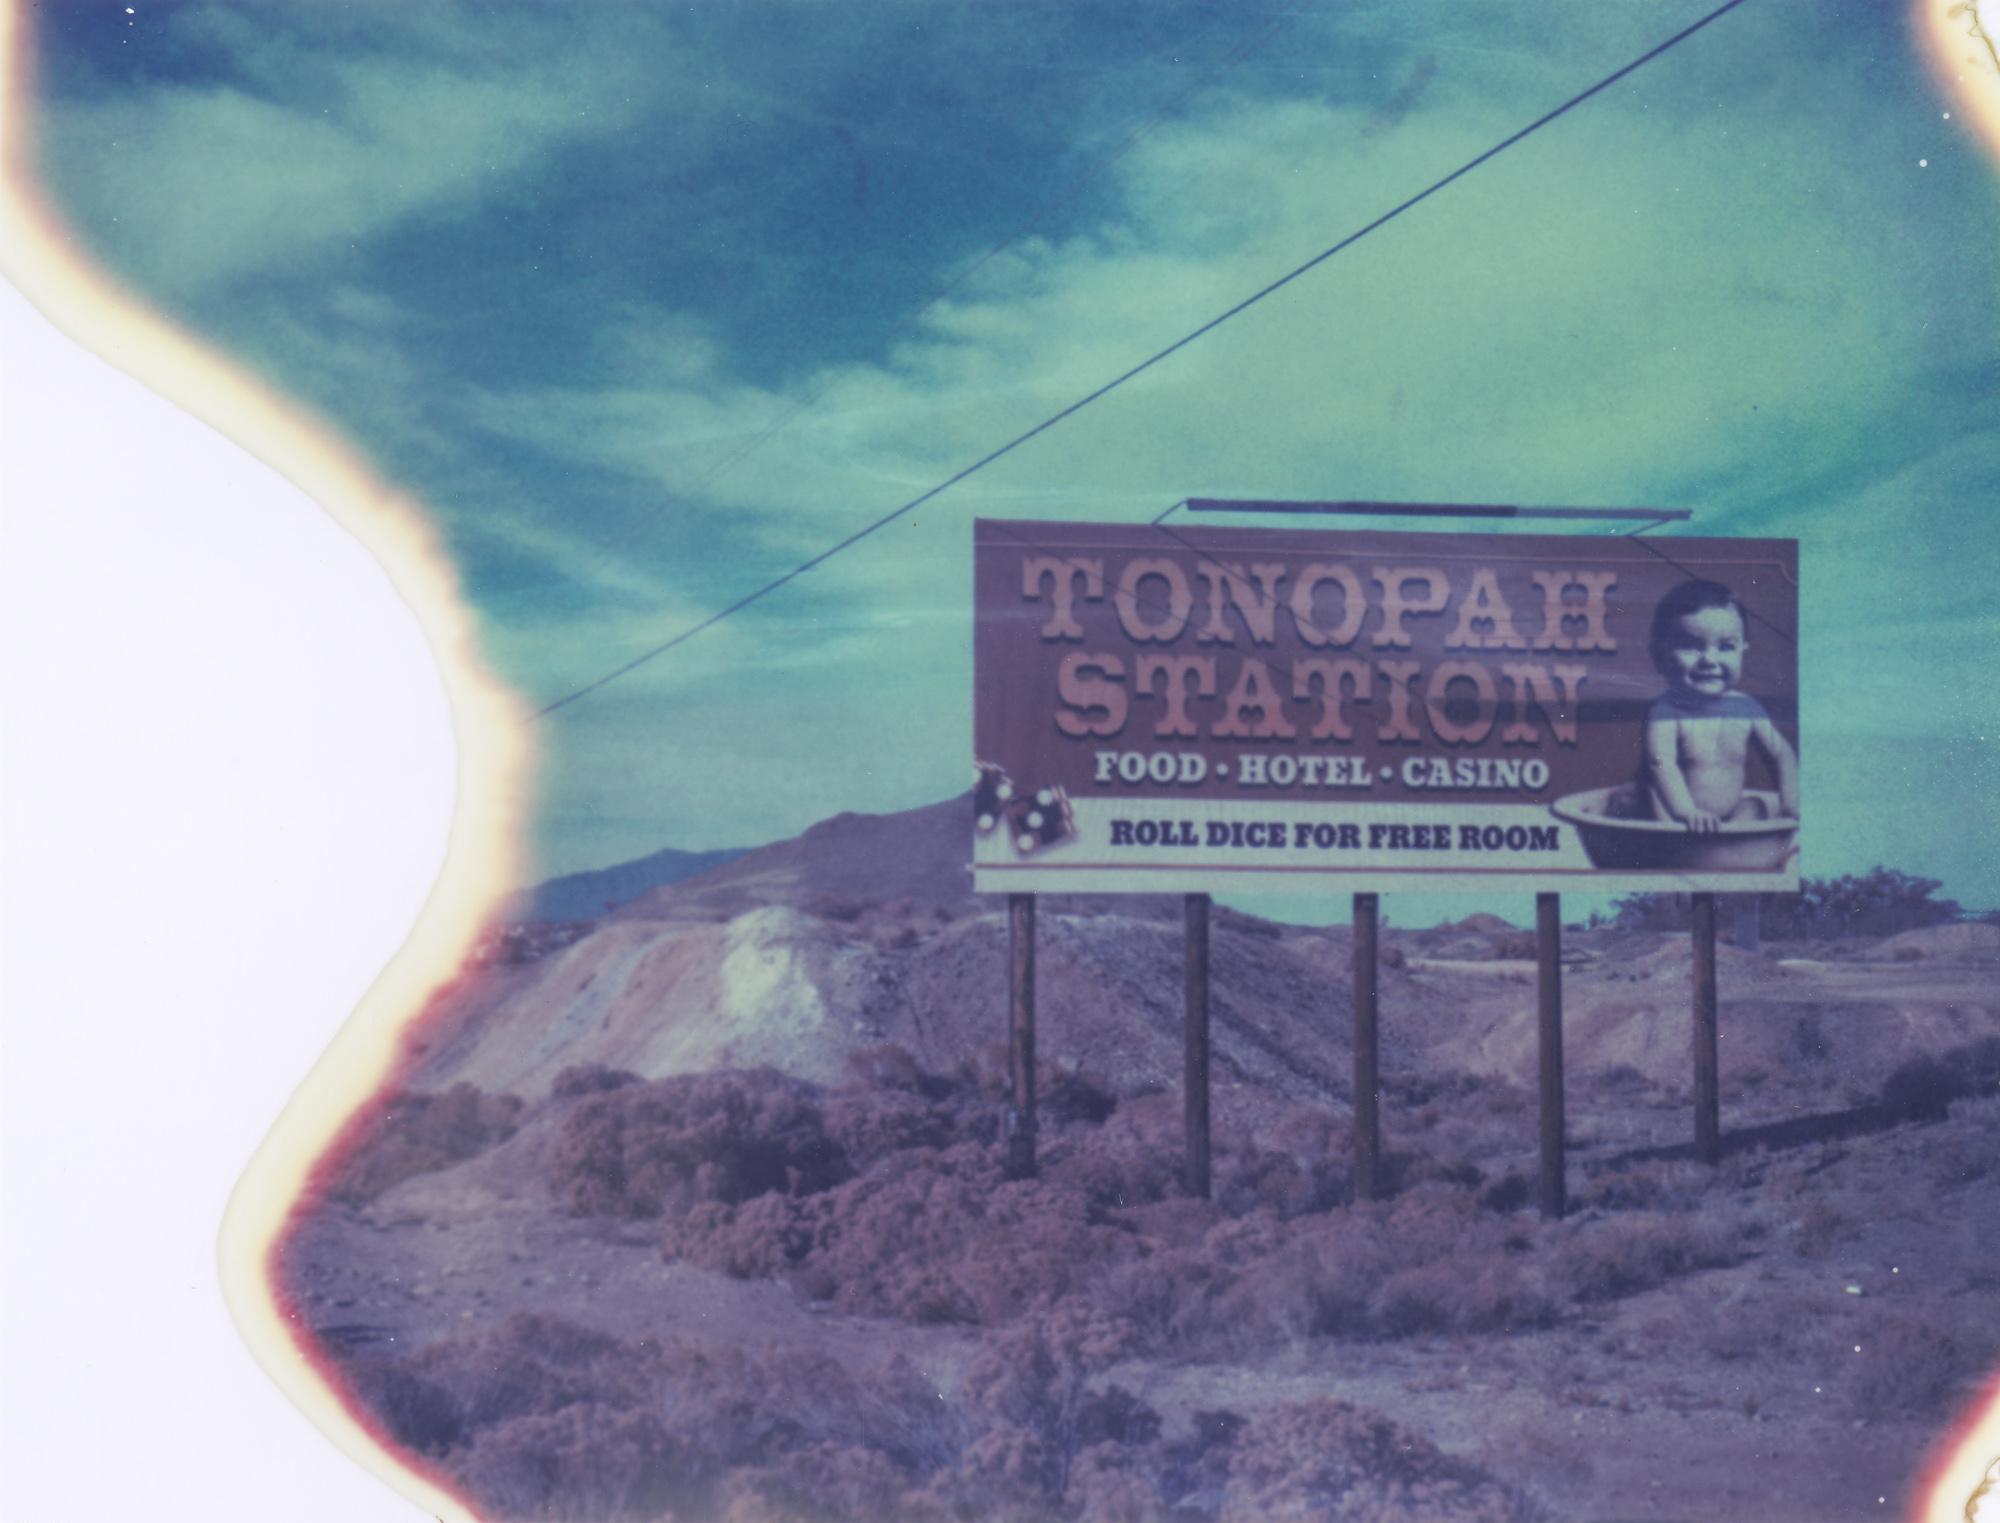 Tonopah calling - 21st Century, Polaroid, Landscape Photography, Contemporary